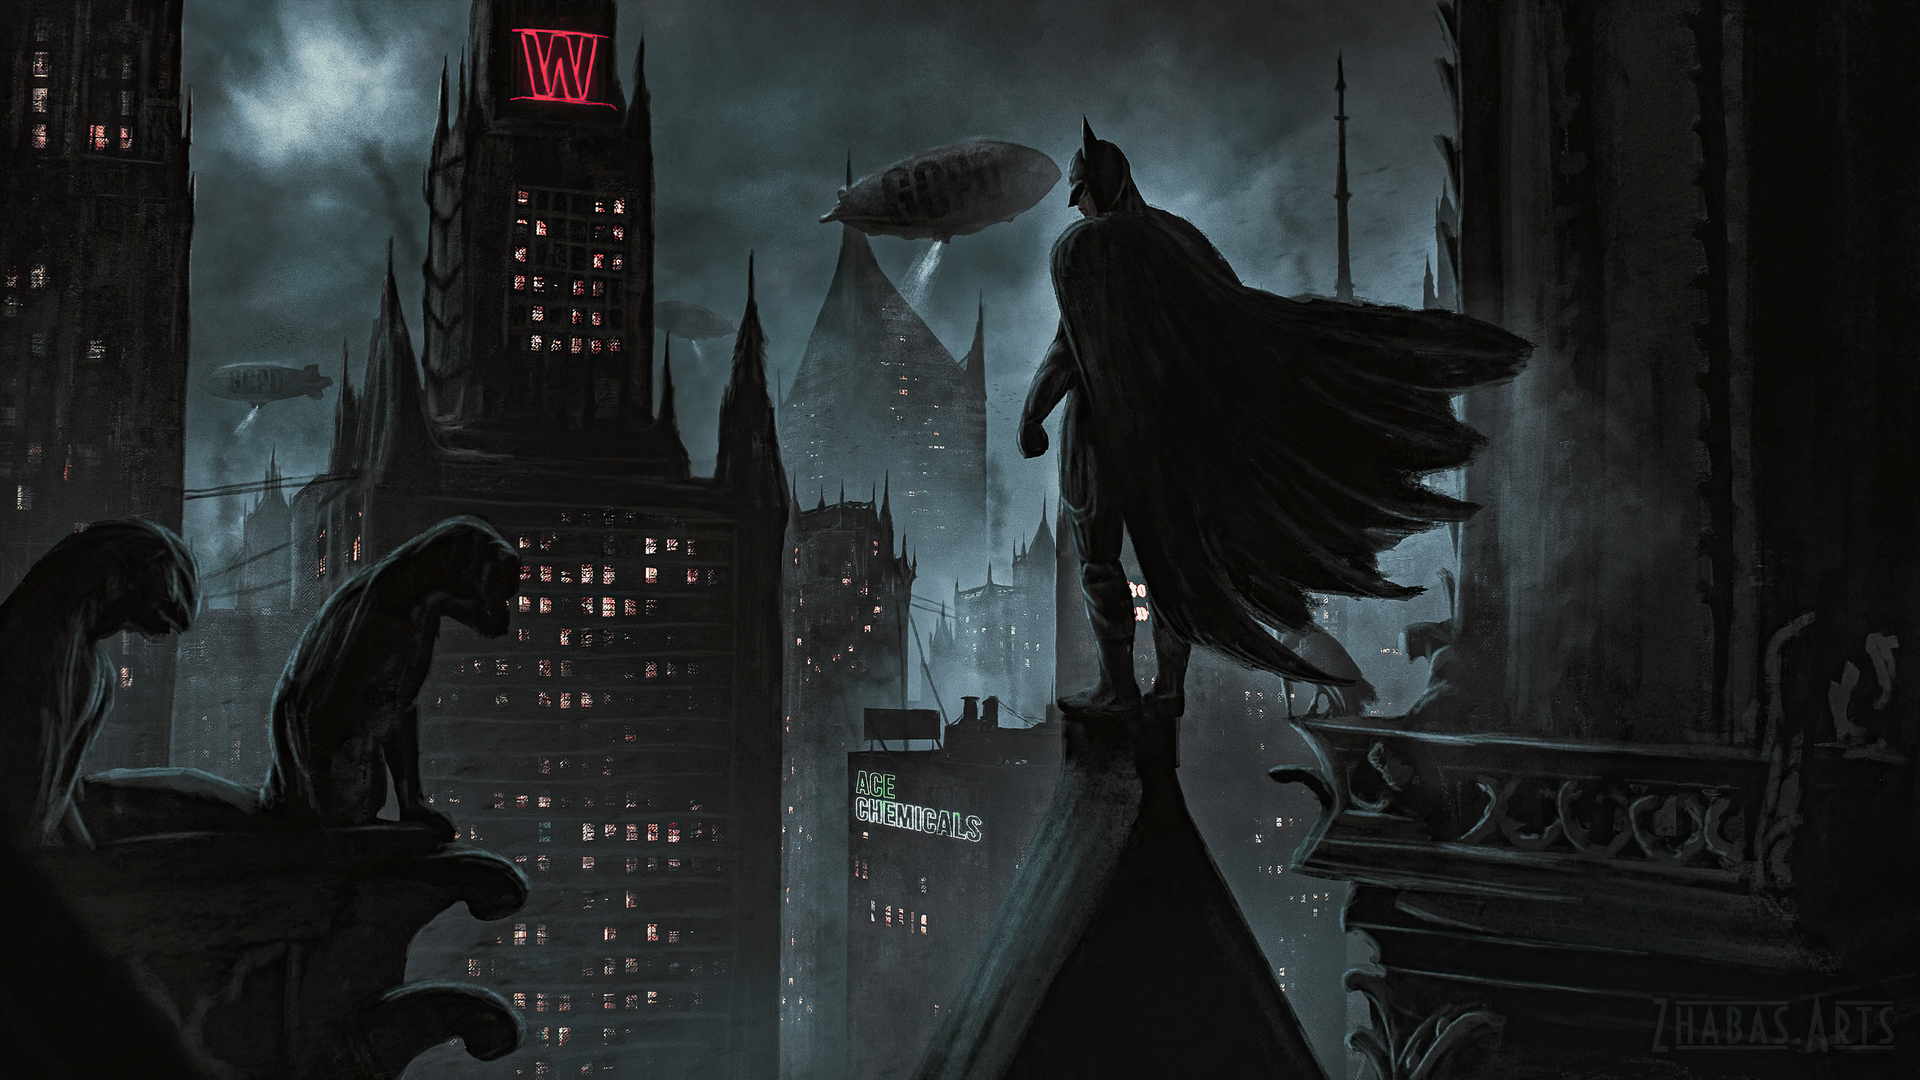 DC Superhero Batman Art Wallpaper, HD Superheroes 4K Wallpapers, Images,  Photos and Background - Wallpapers Den